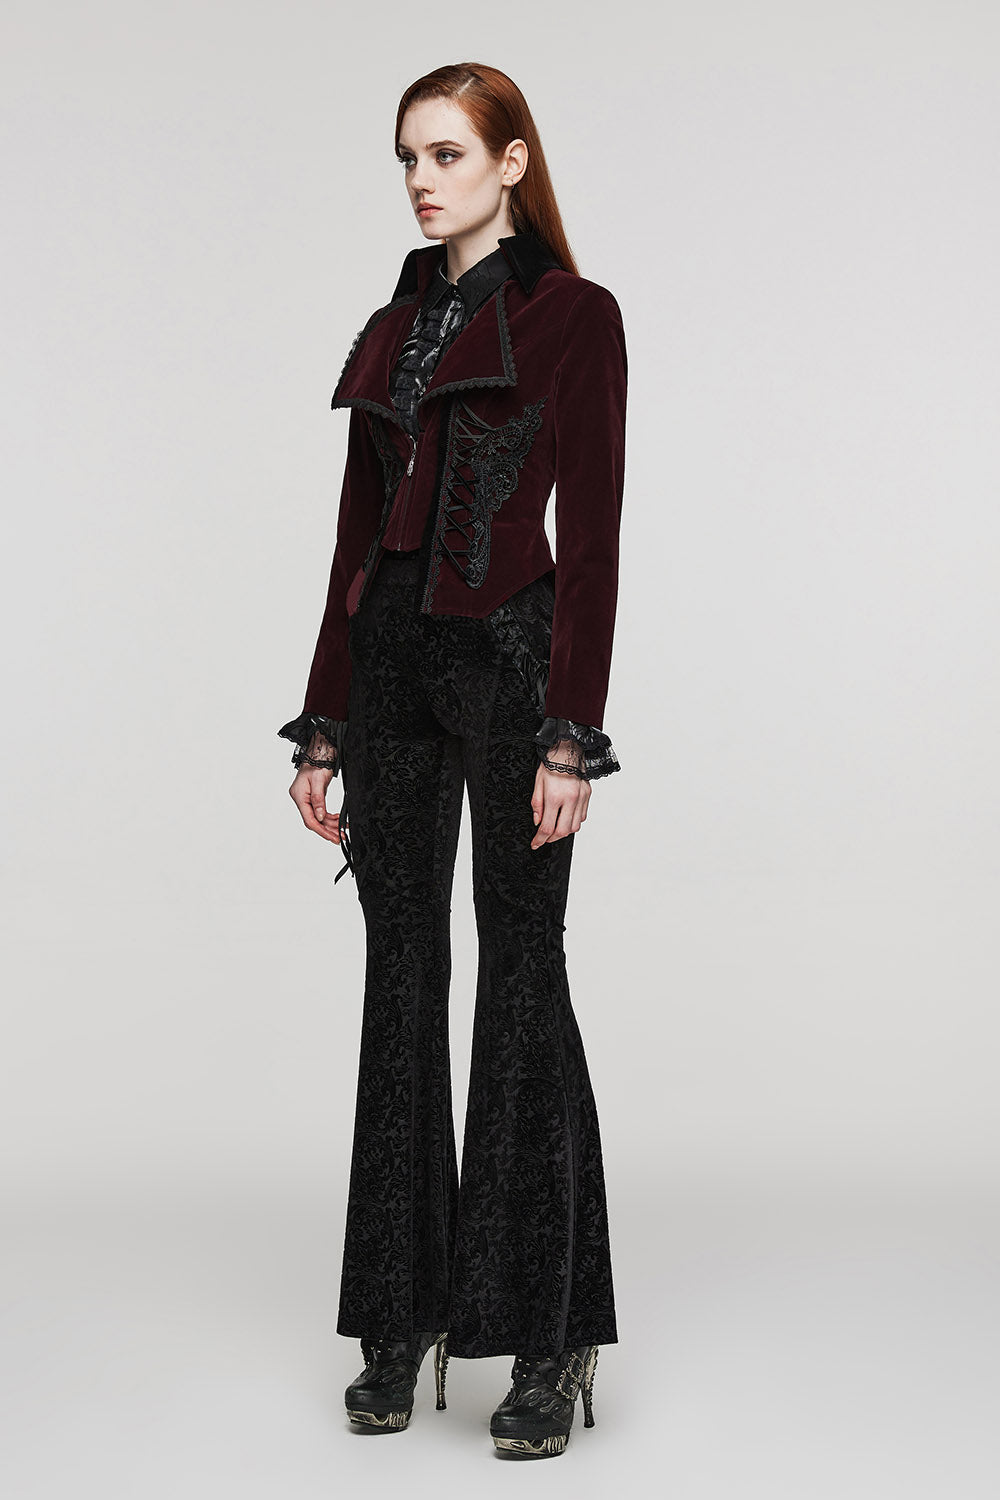 vampire gothic coat for women